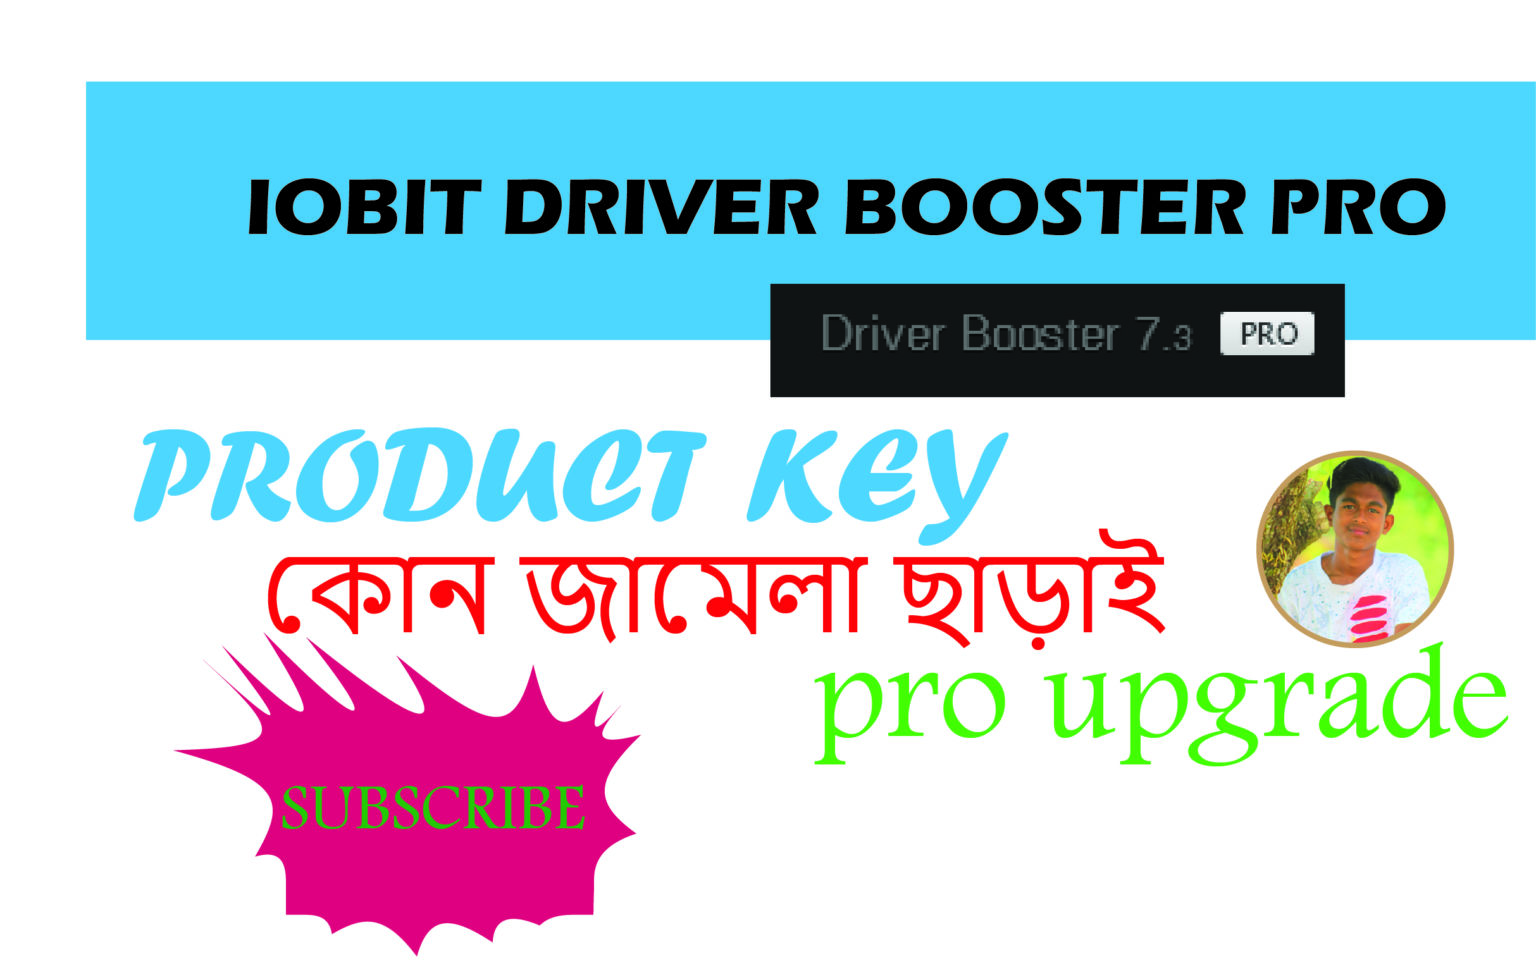 IOBIT DRIVER BOOSTER PRO -license key । how to active driver booster pro । জামেলা ছাড়াই প্রো-এক্টিভ।